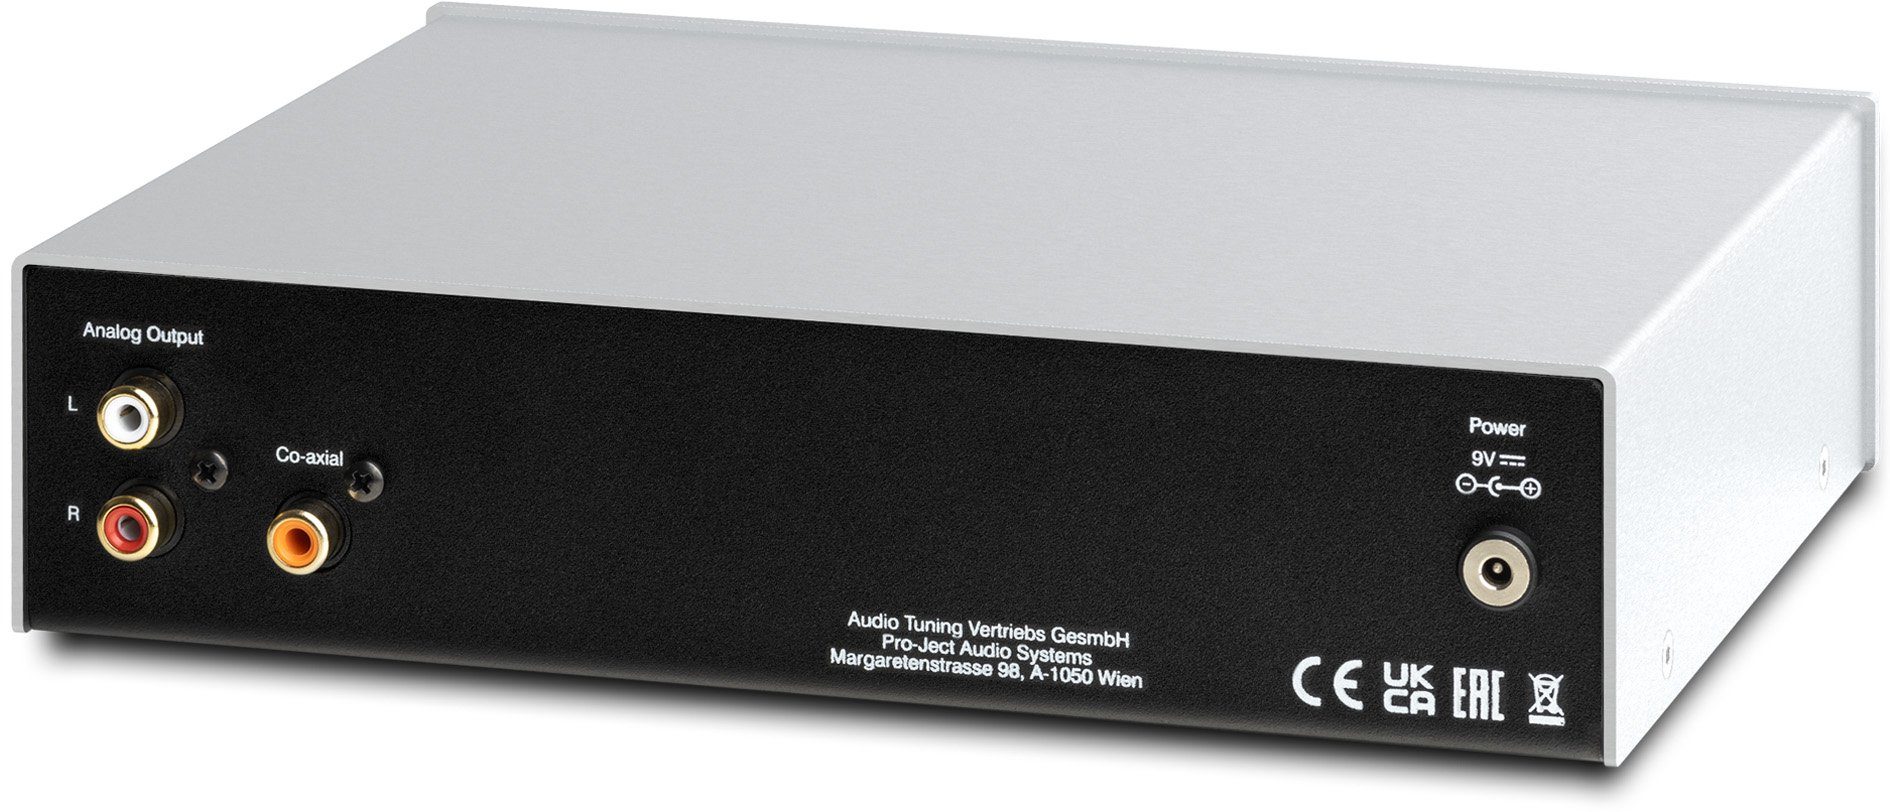 flacher Box Silber Ultra kompakter Stereo-CD Pro-Ject CD S3 Player